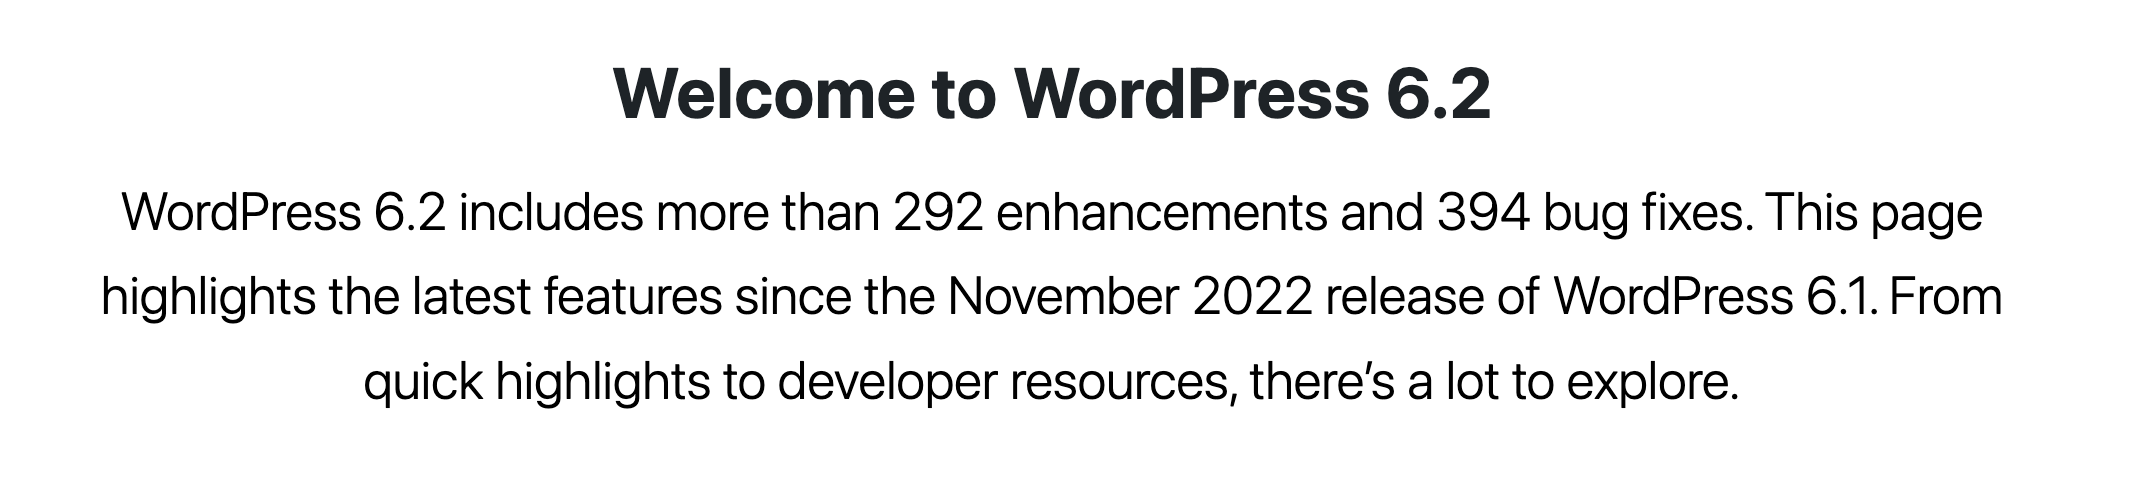 Wordpress 6.2 